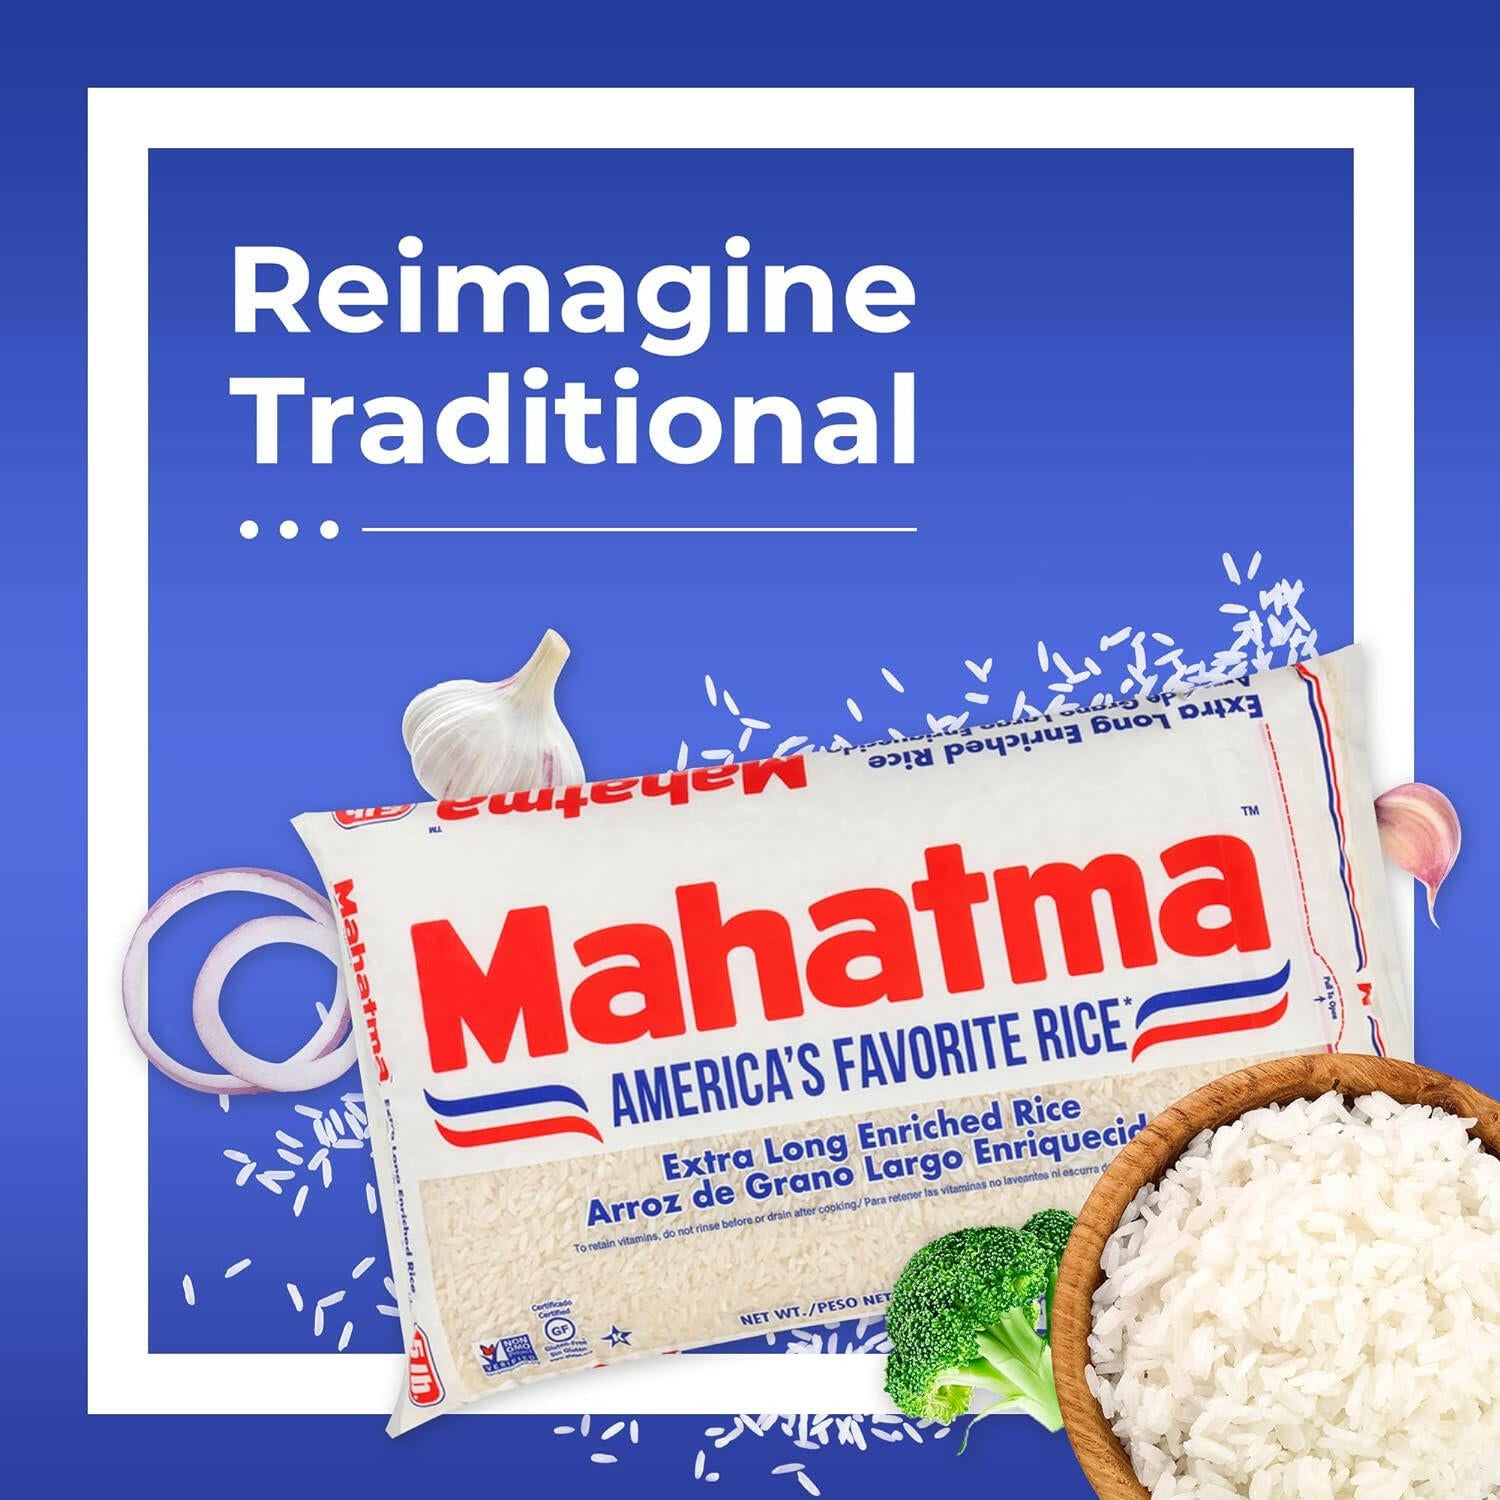 Mahatma Extra Long Grain Enriched Rice 80 oz